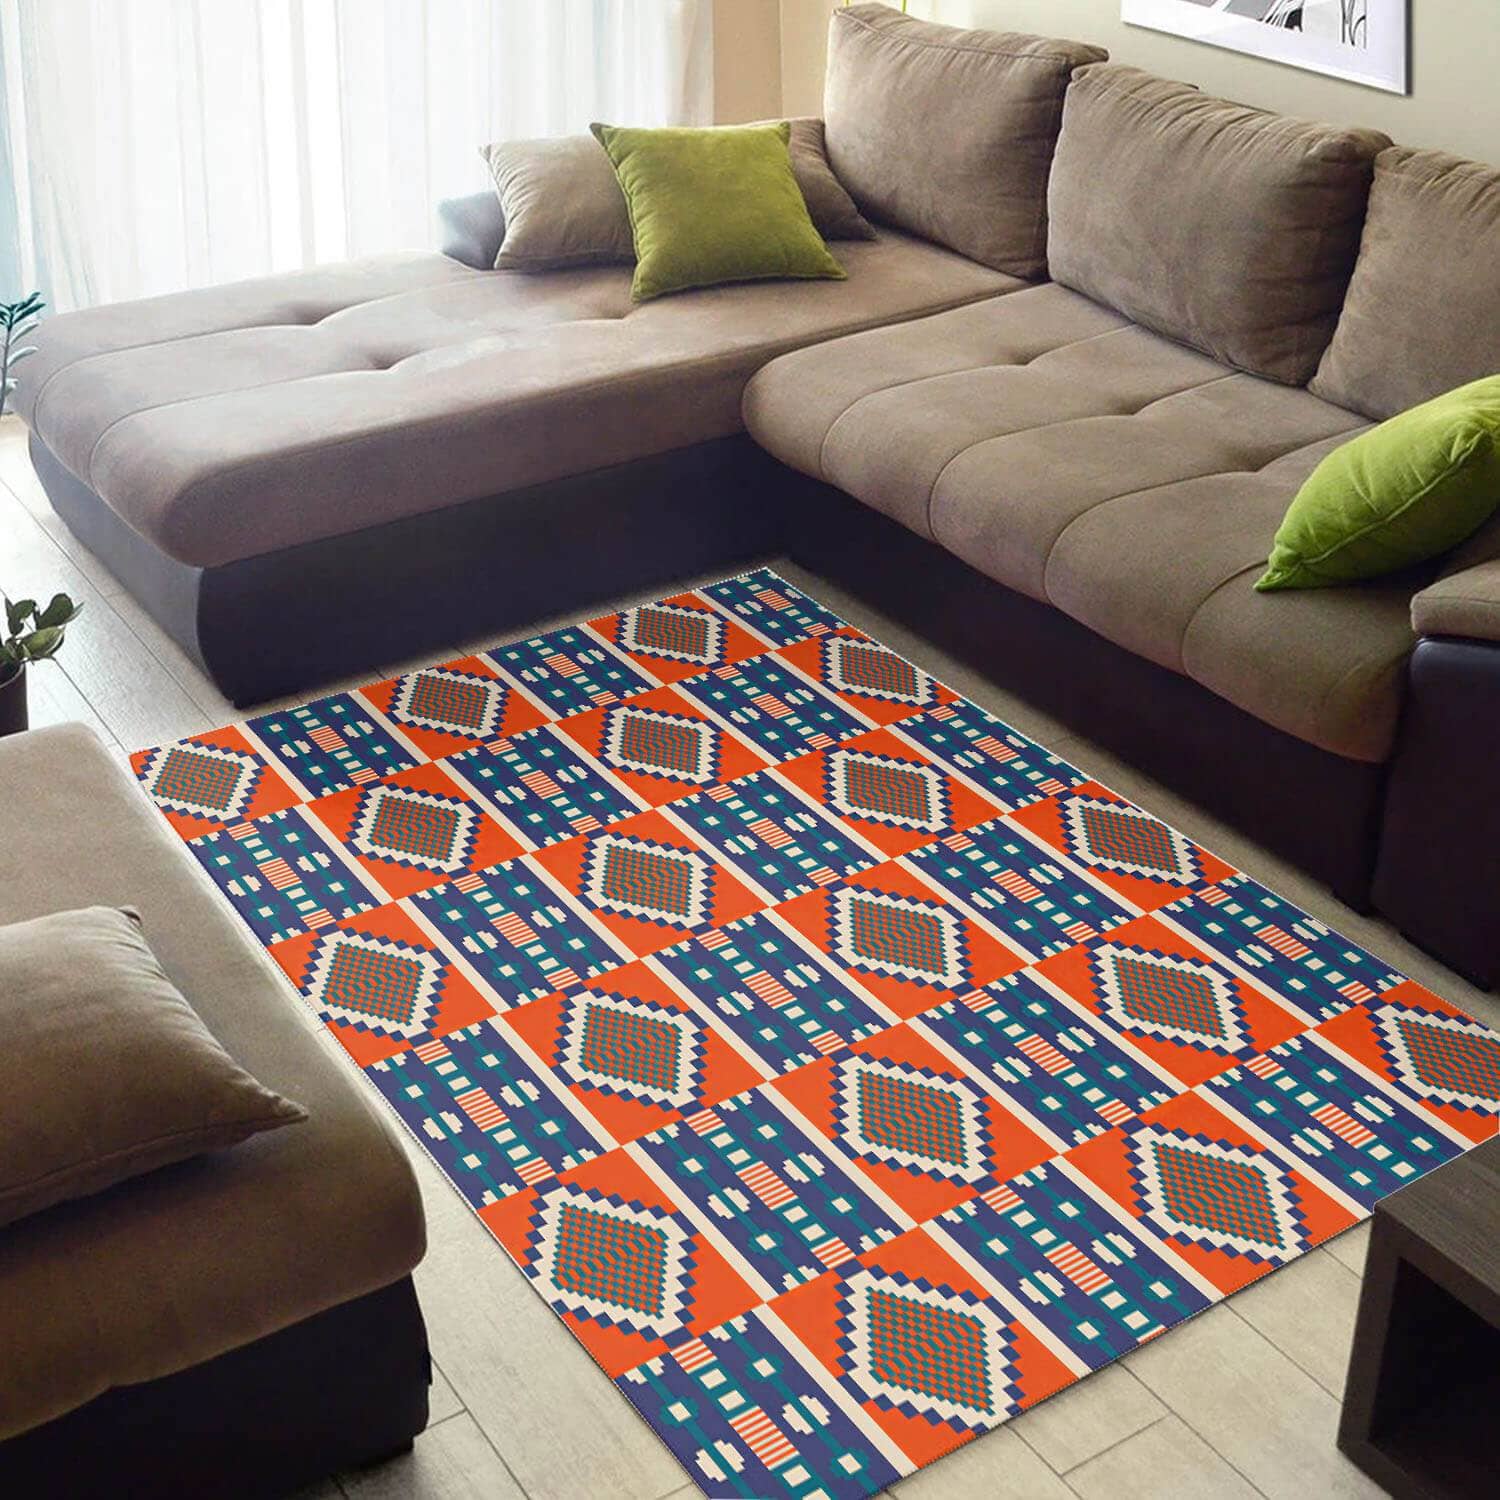 Modern African Nice American Art Ethnic Seamless Pattern Carpet Style Rug